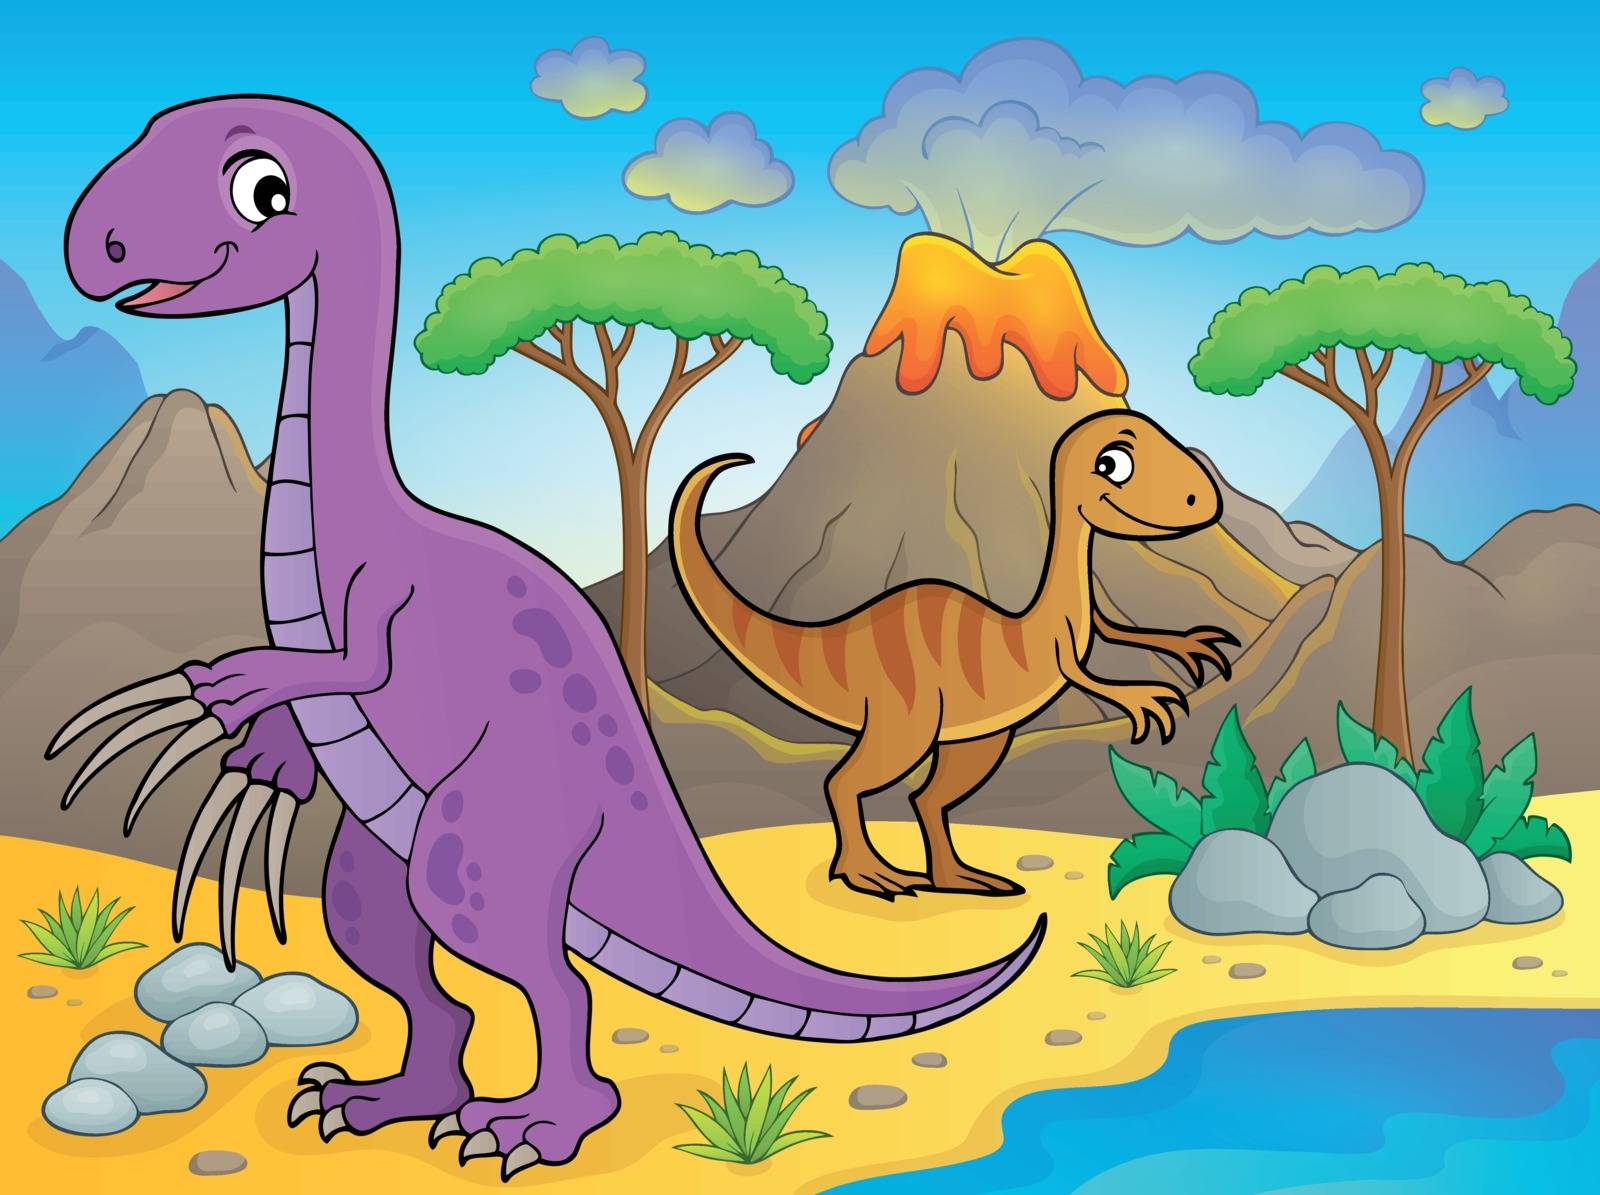 Image with dinosaur thematics 8 - eps10 vector illustration.